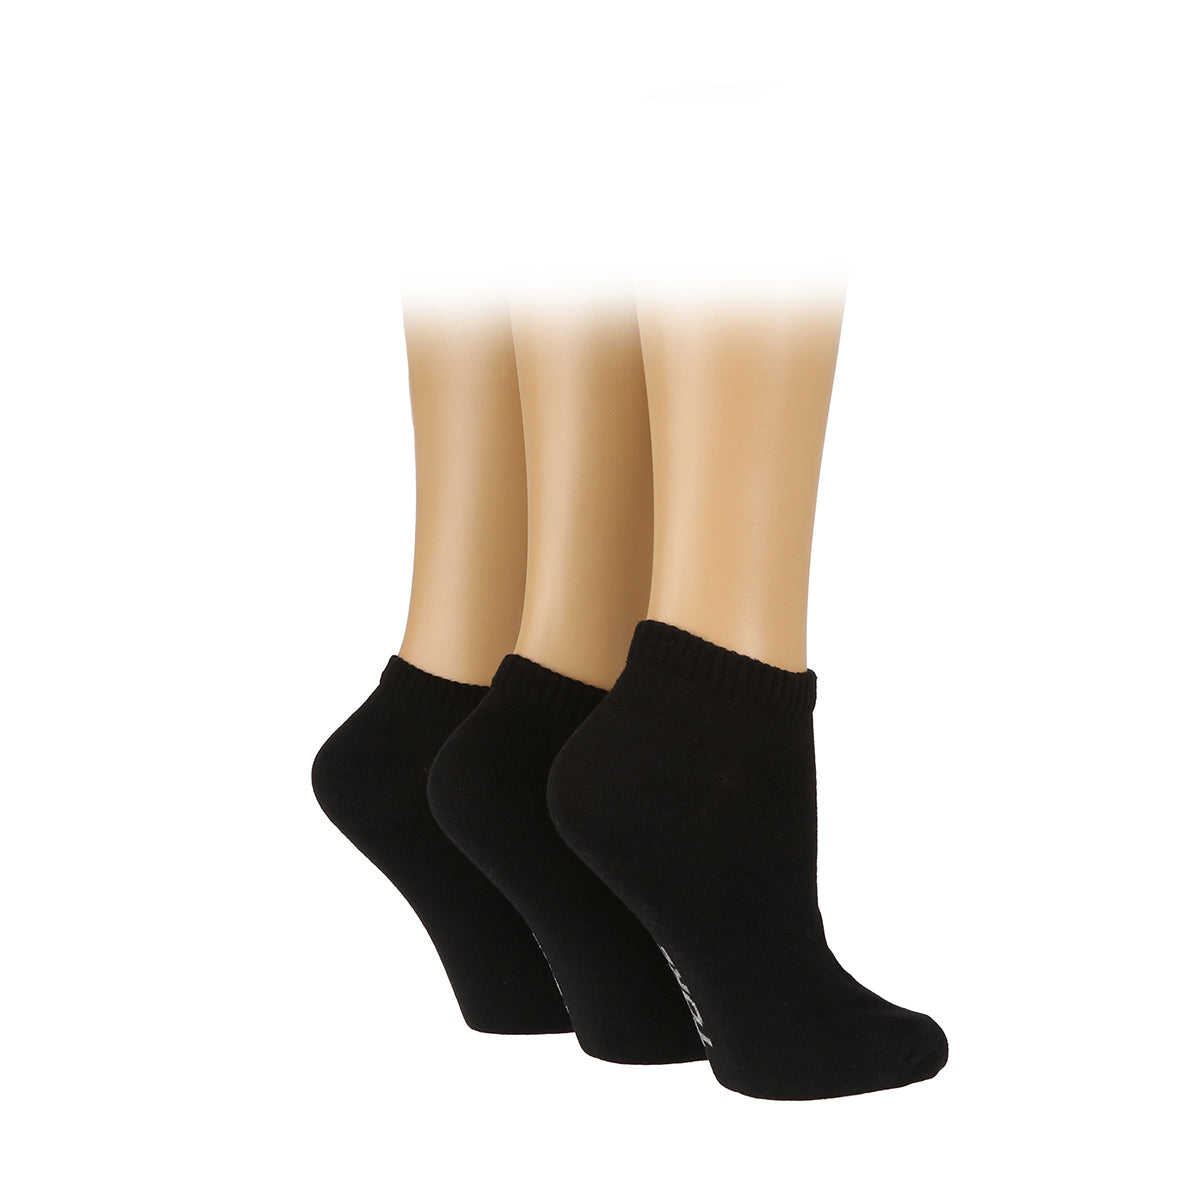 Women's Plain Trainer Sports Socks - 3 Pairs